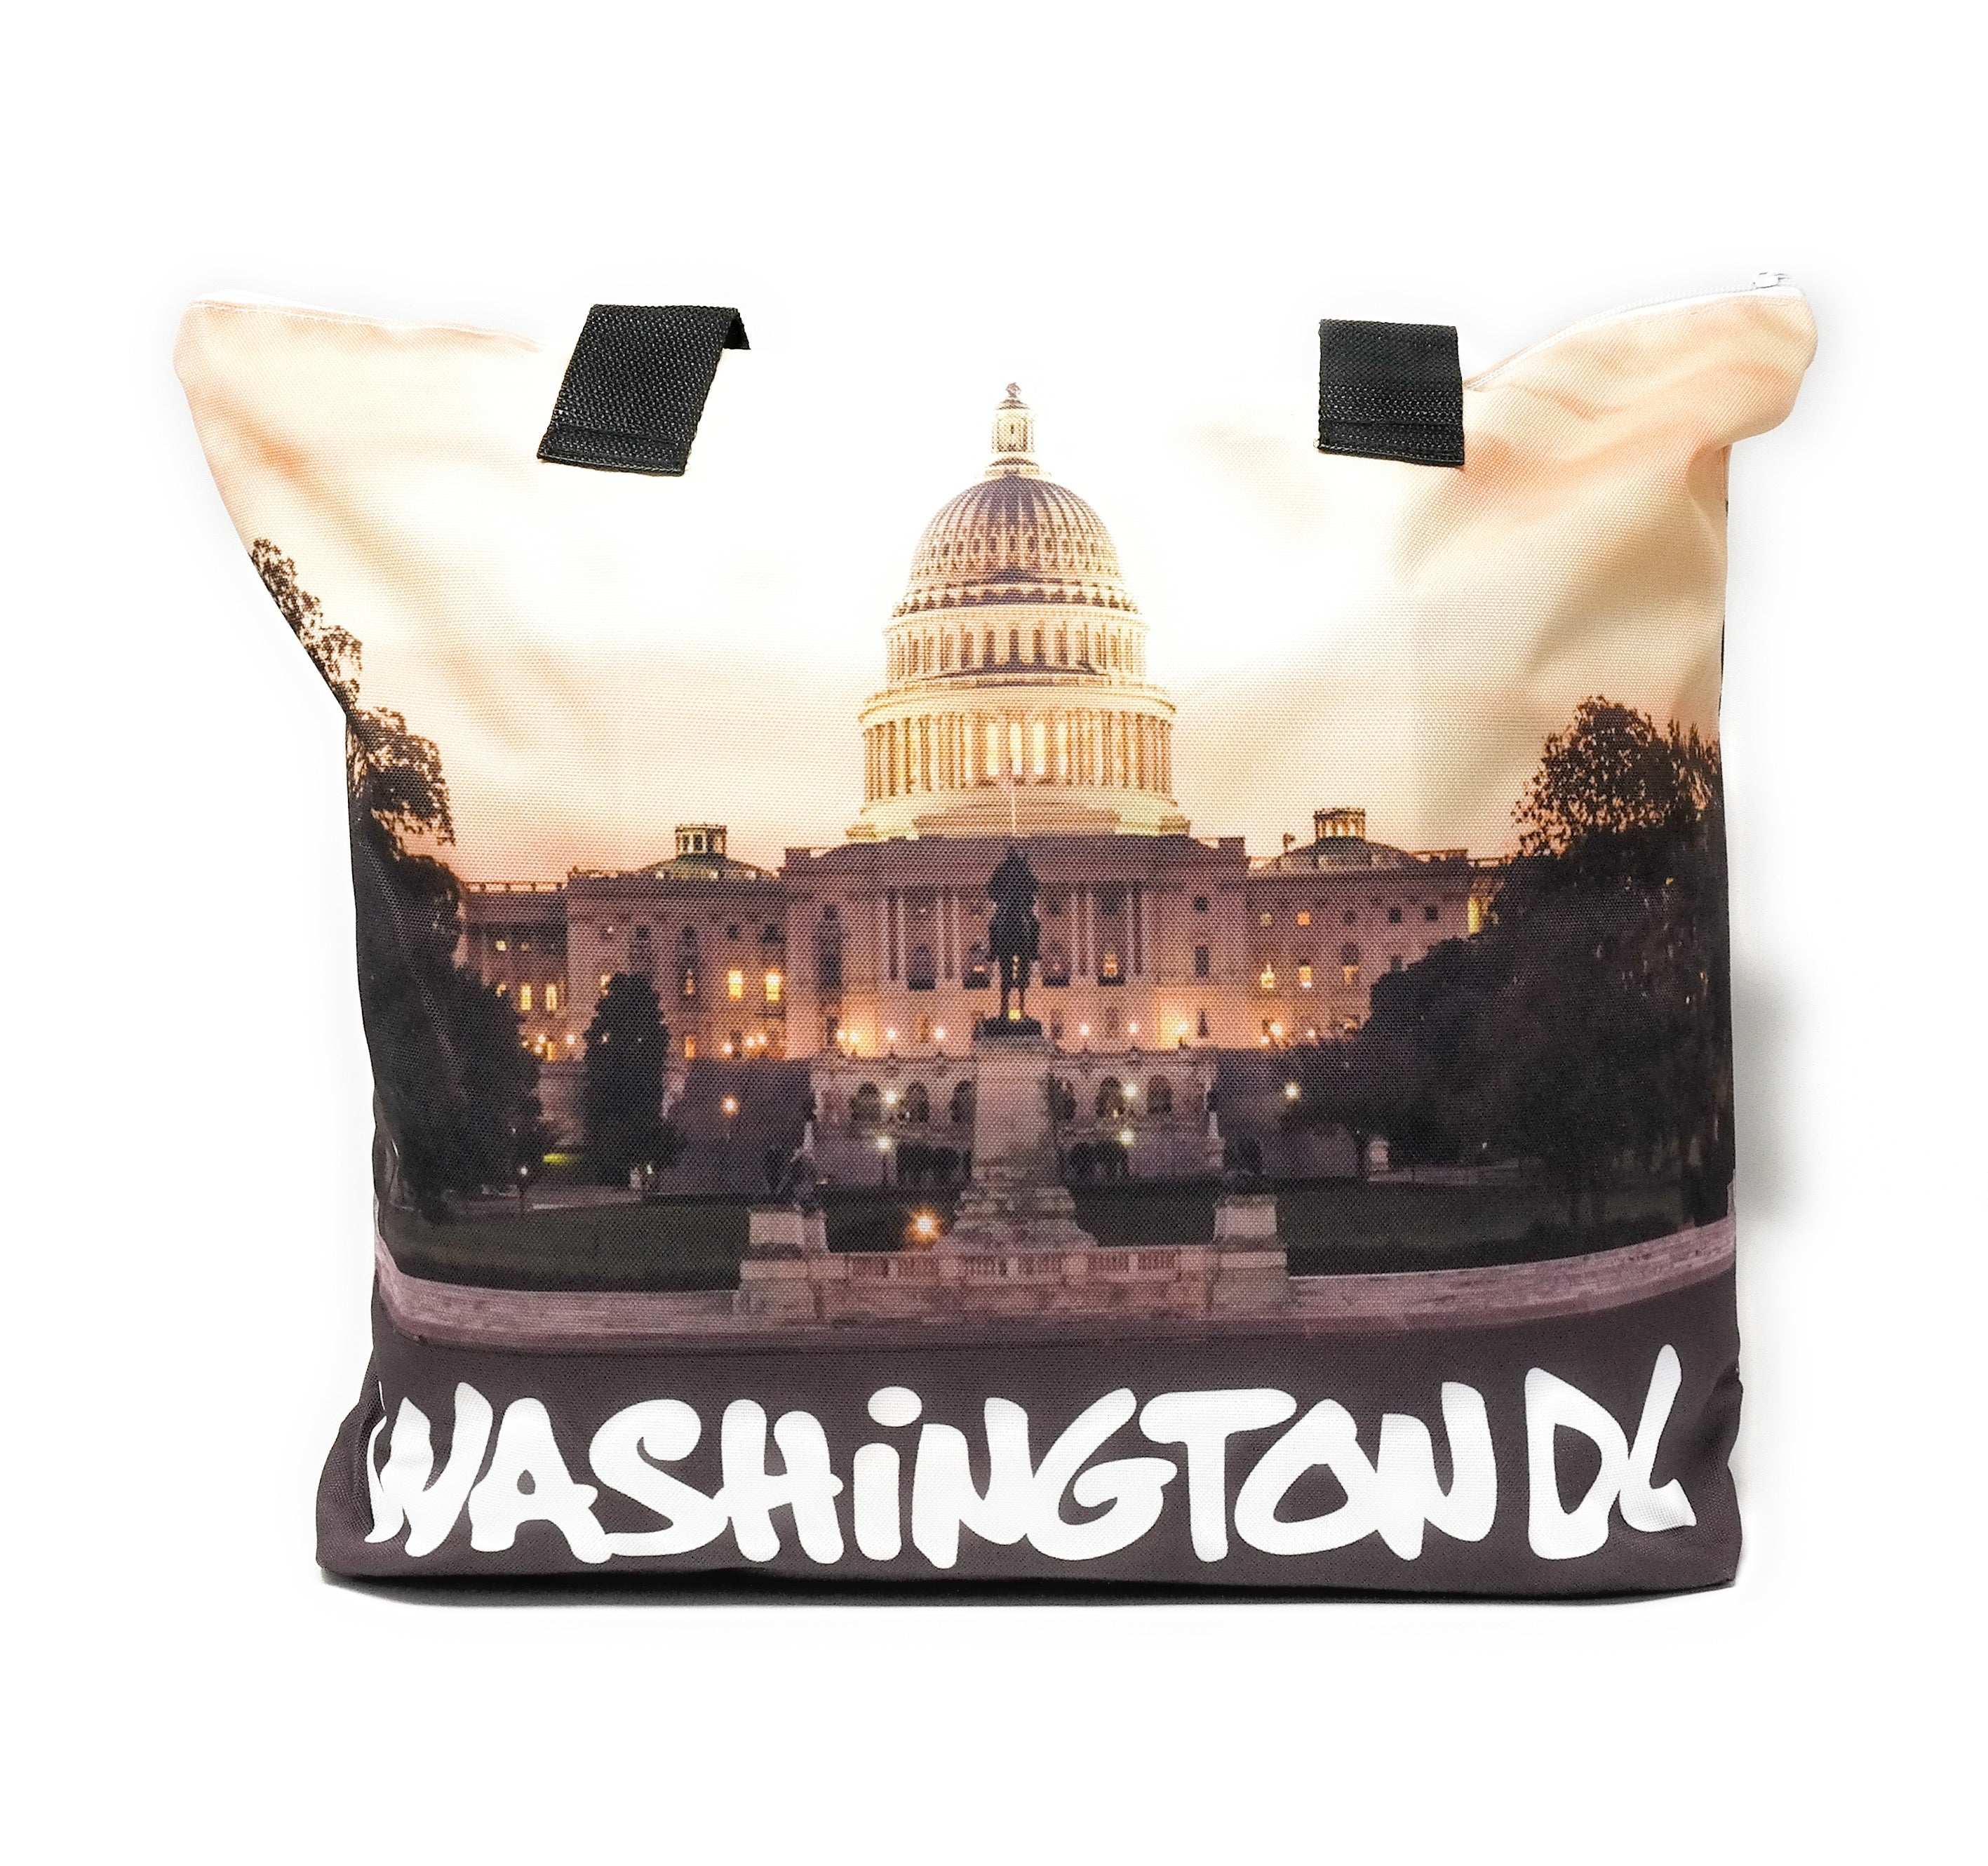 Washington DC Tote Bag (Multiple Styles)